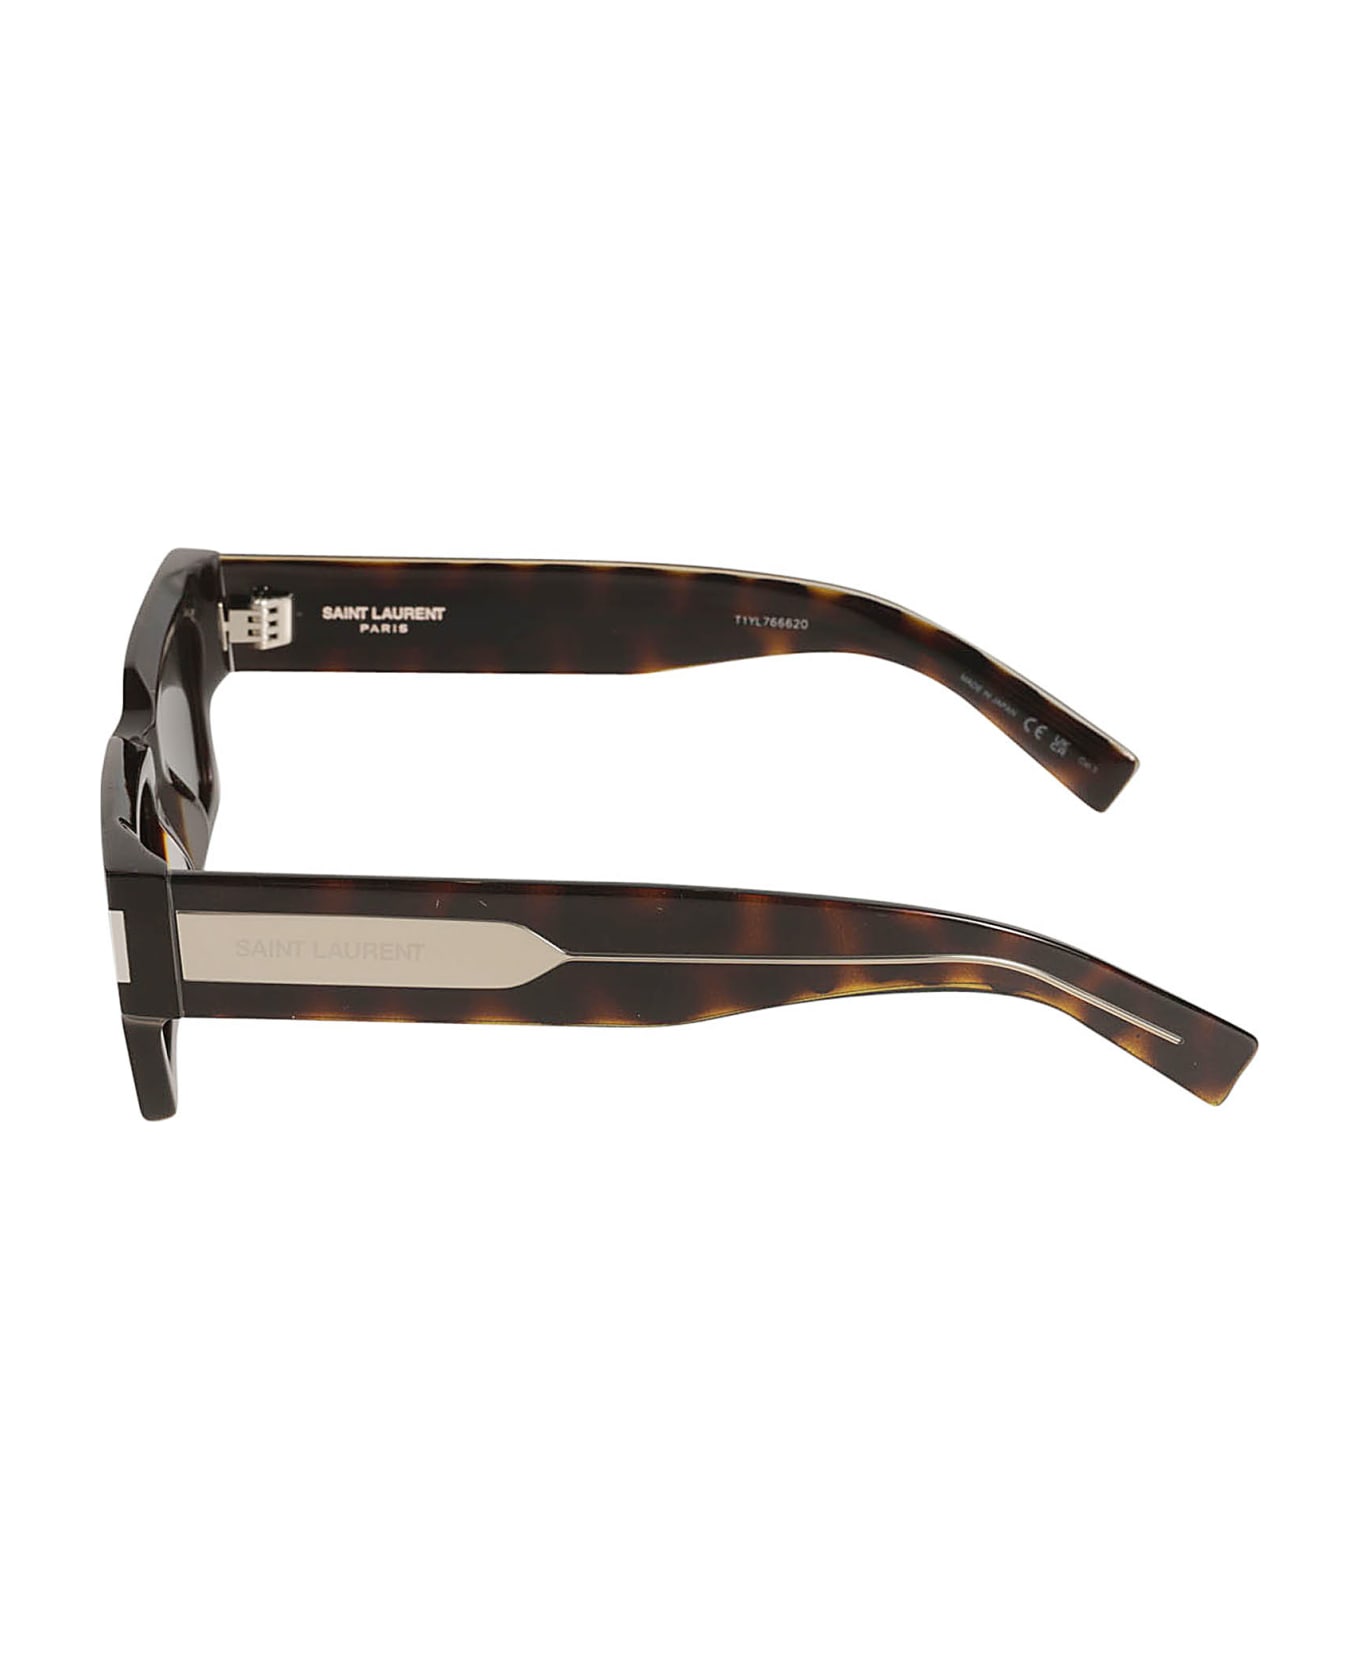 Saint Laurent Eyewear Rectangular Frame Flame Effect Sunglasses - Havana/Crystal/Grey